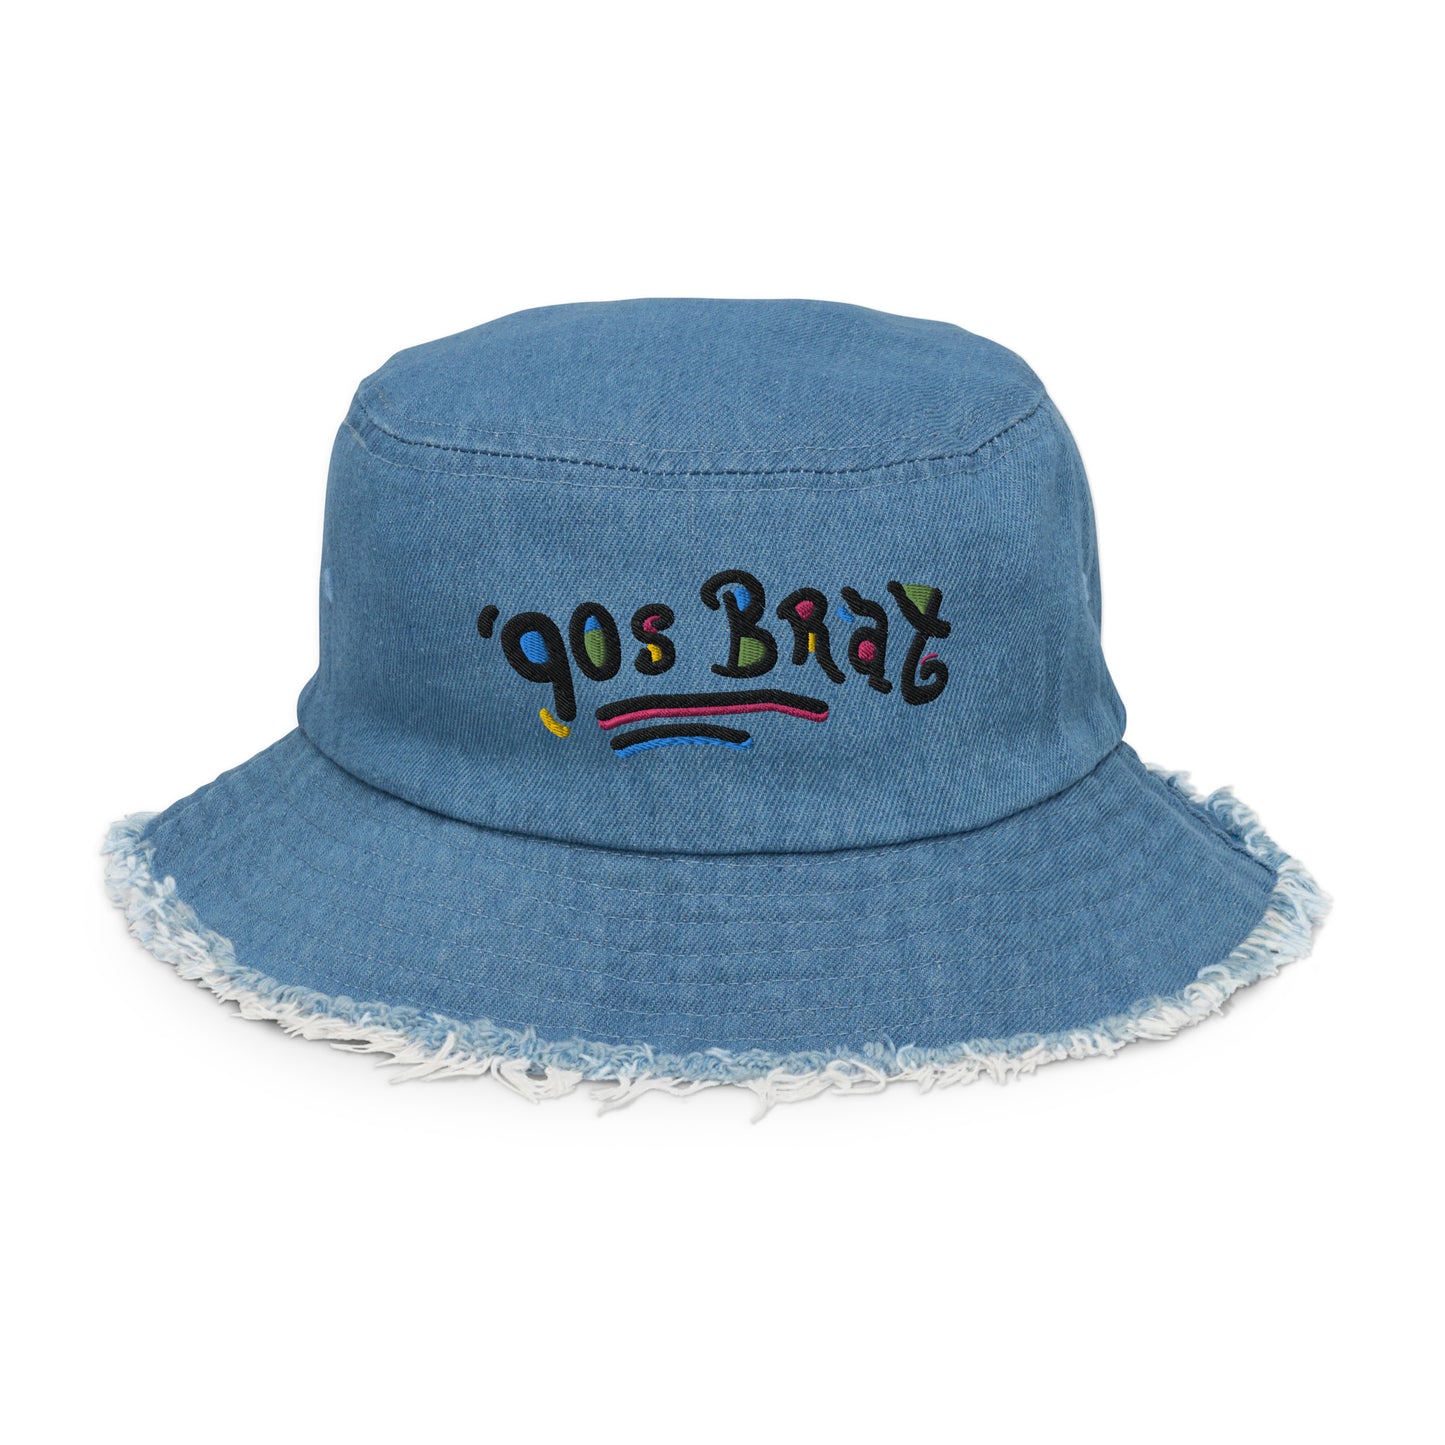 90s Brat distressed denim bucket hat